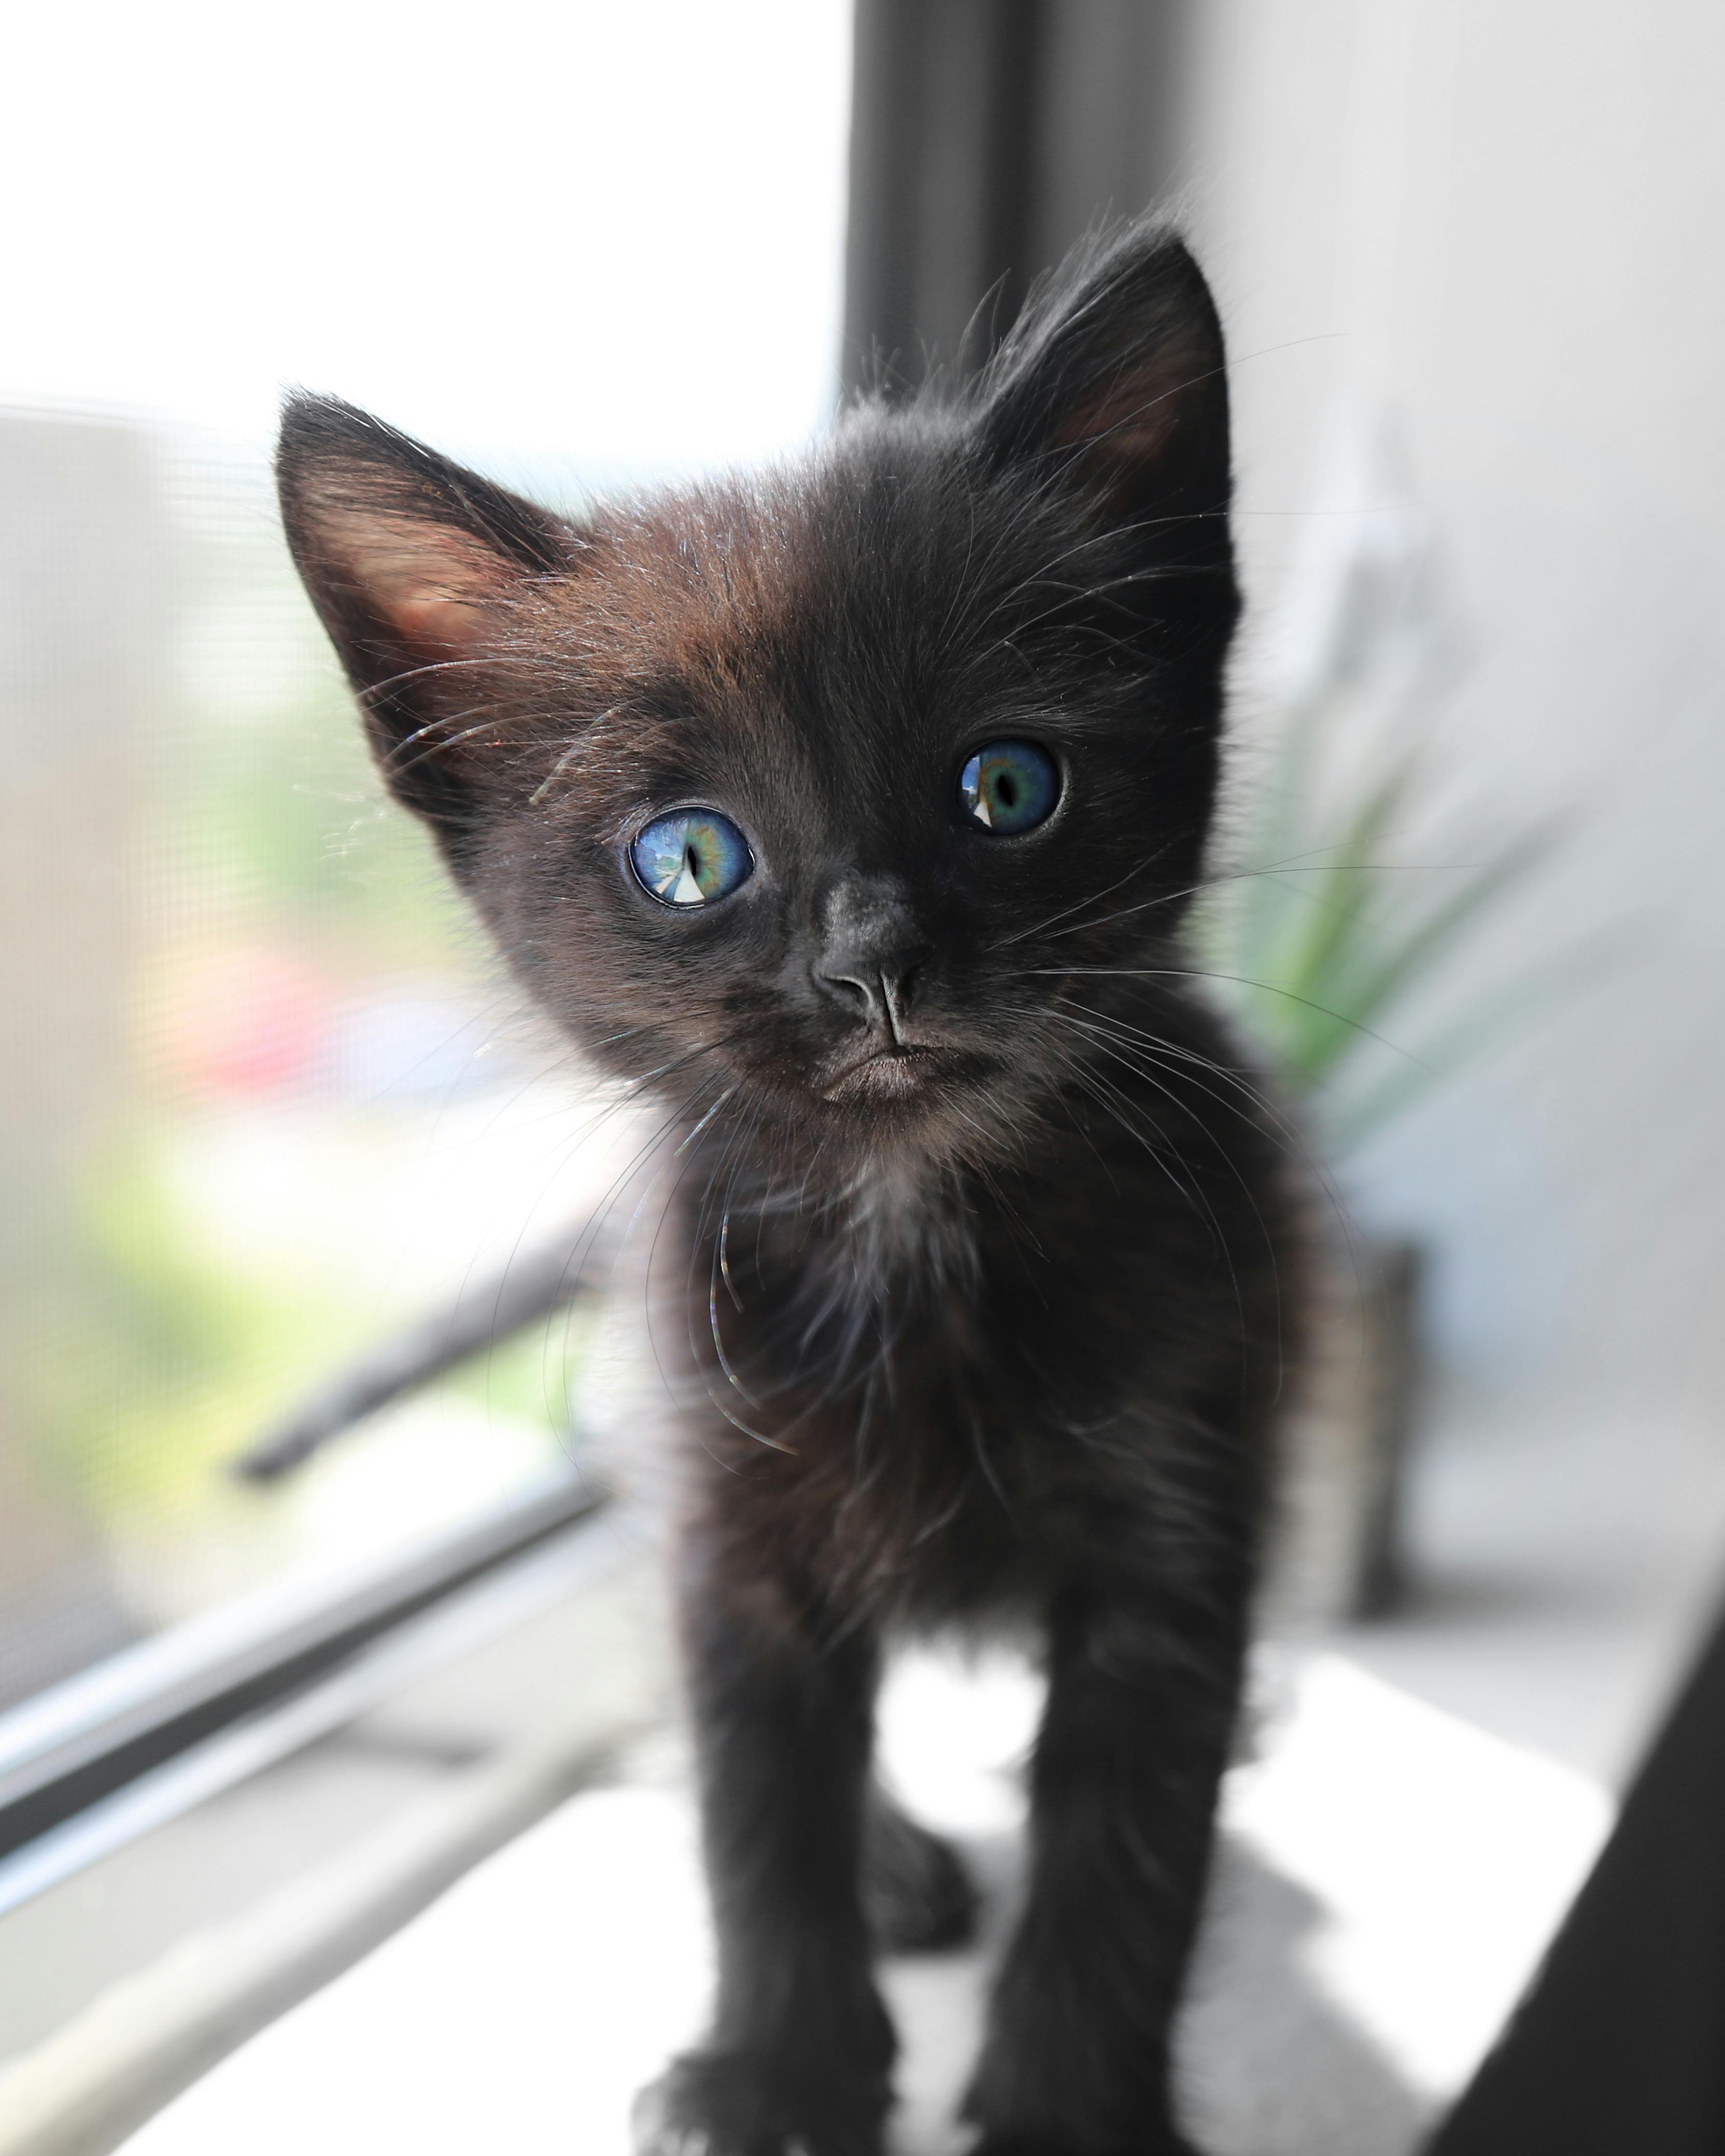 Download Free Kitten Stock Photos